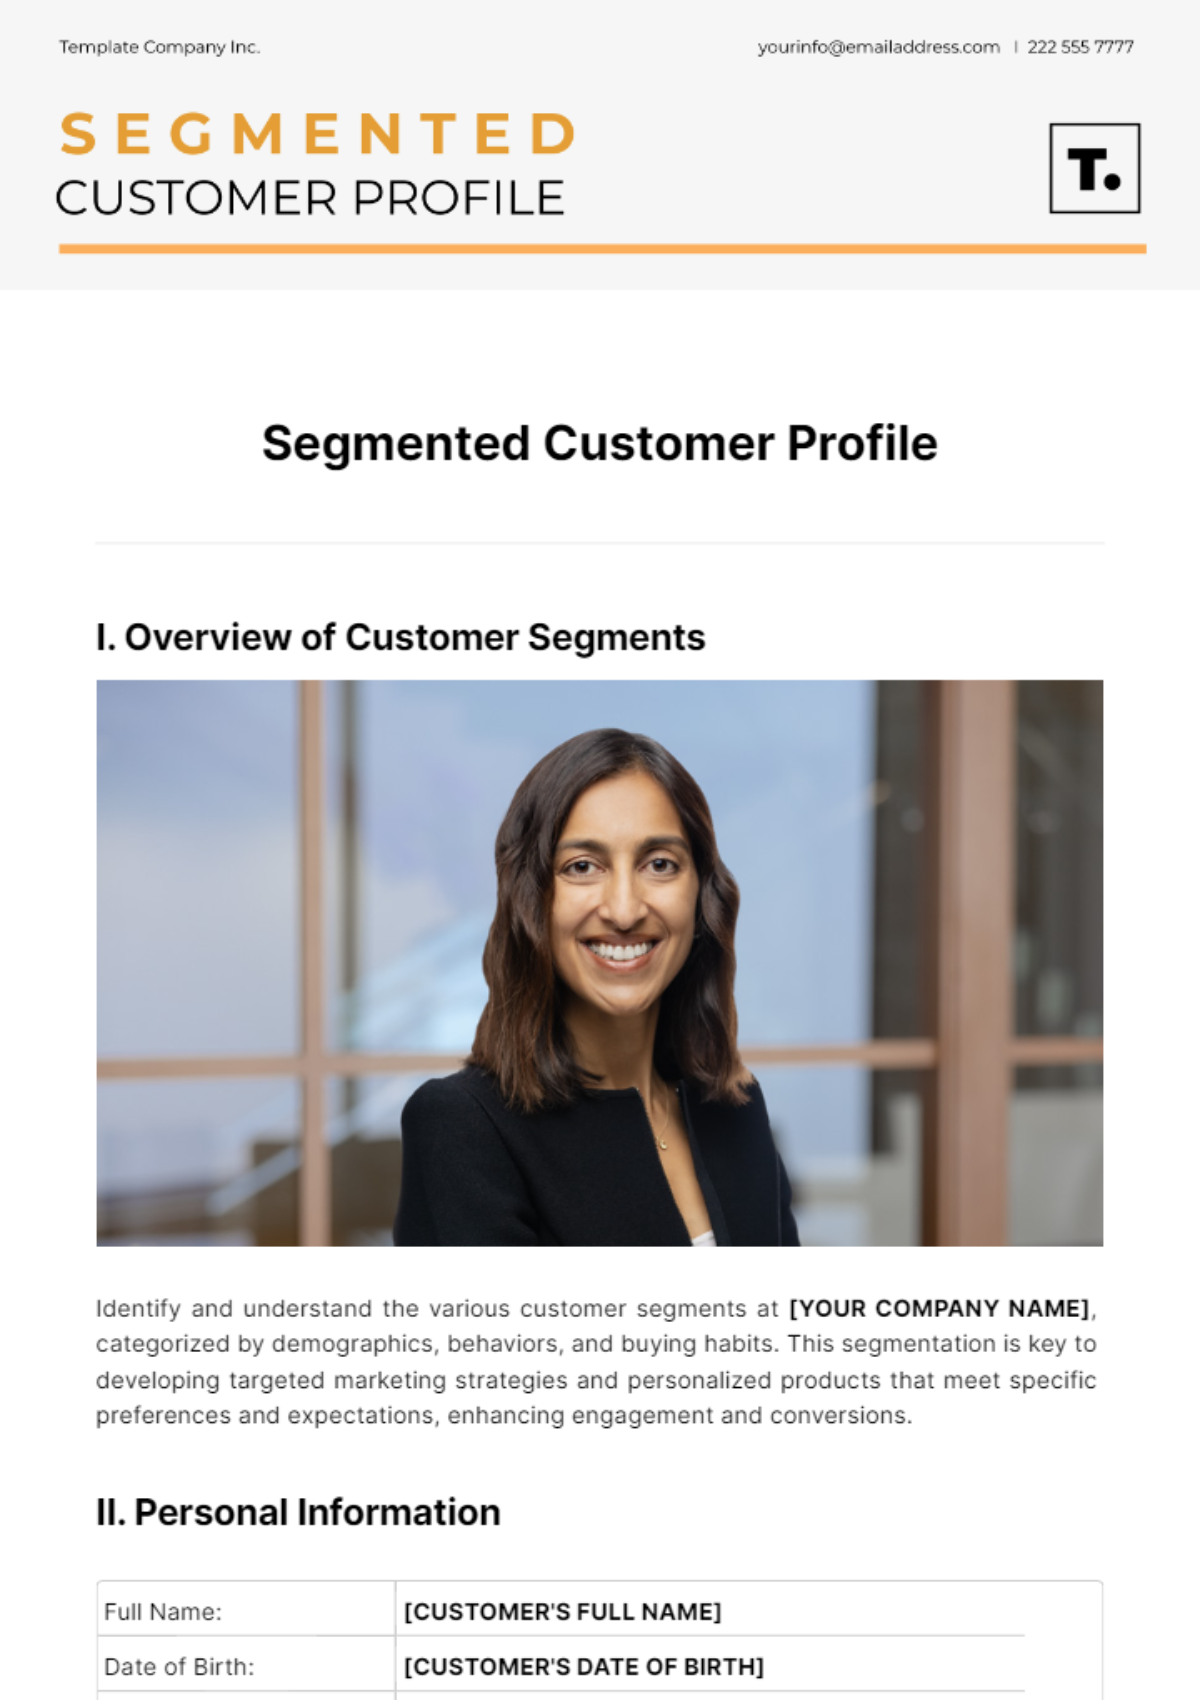 Segmented Customer Profile Template